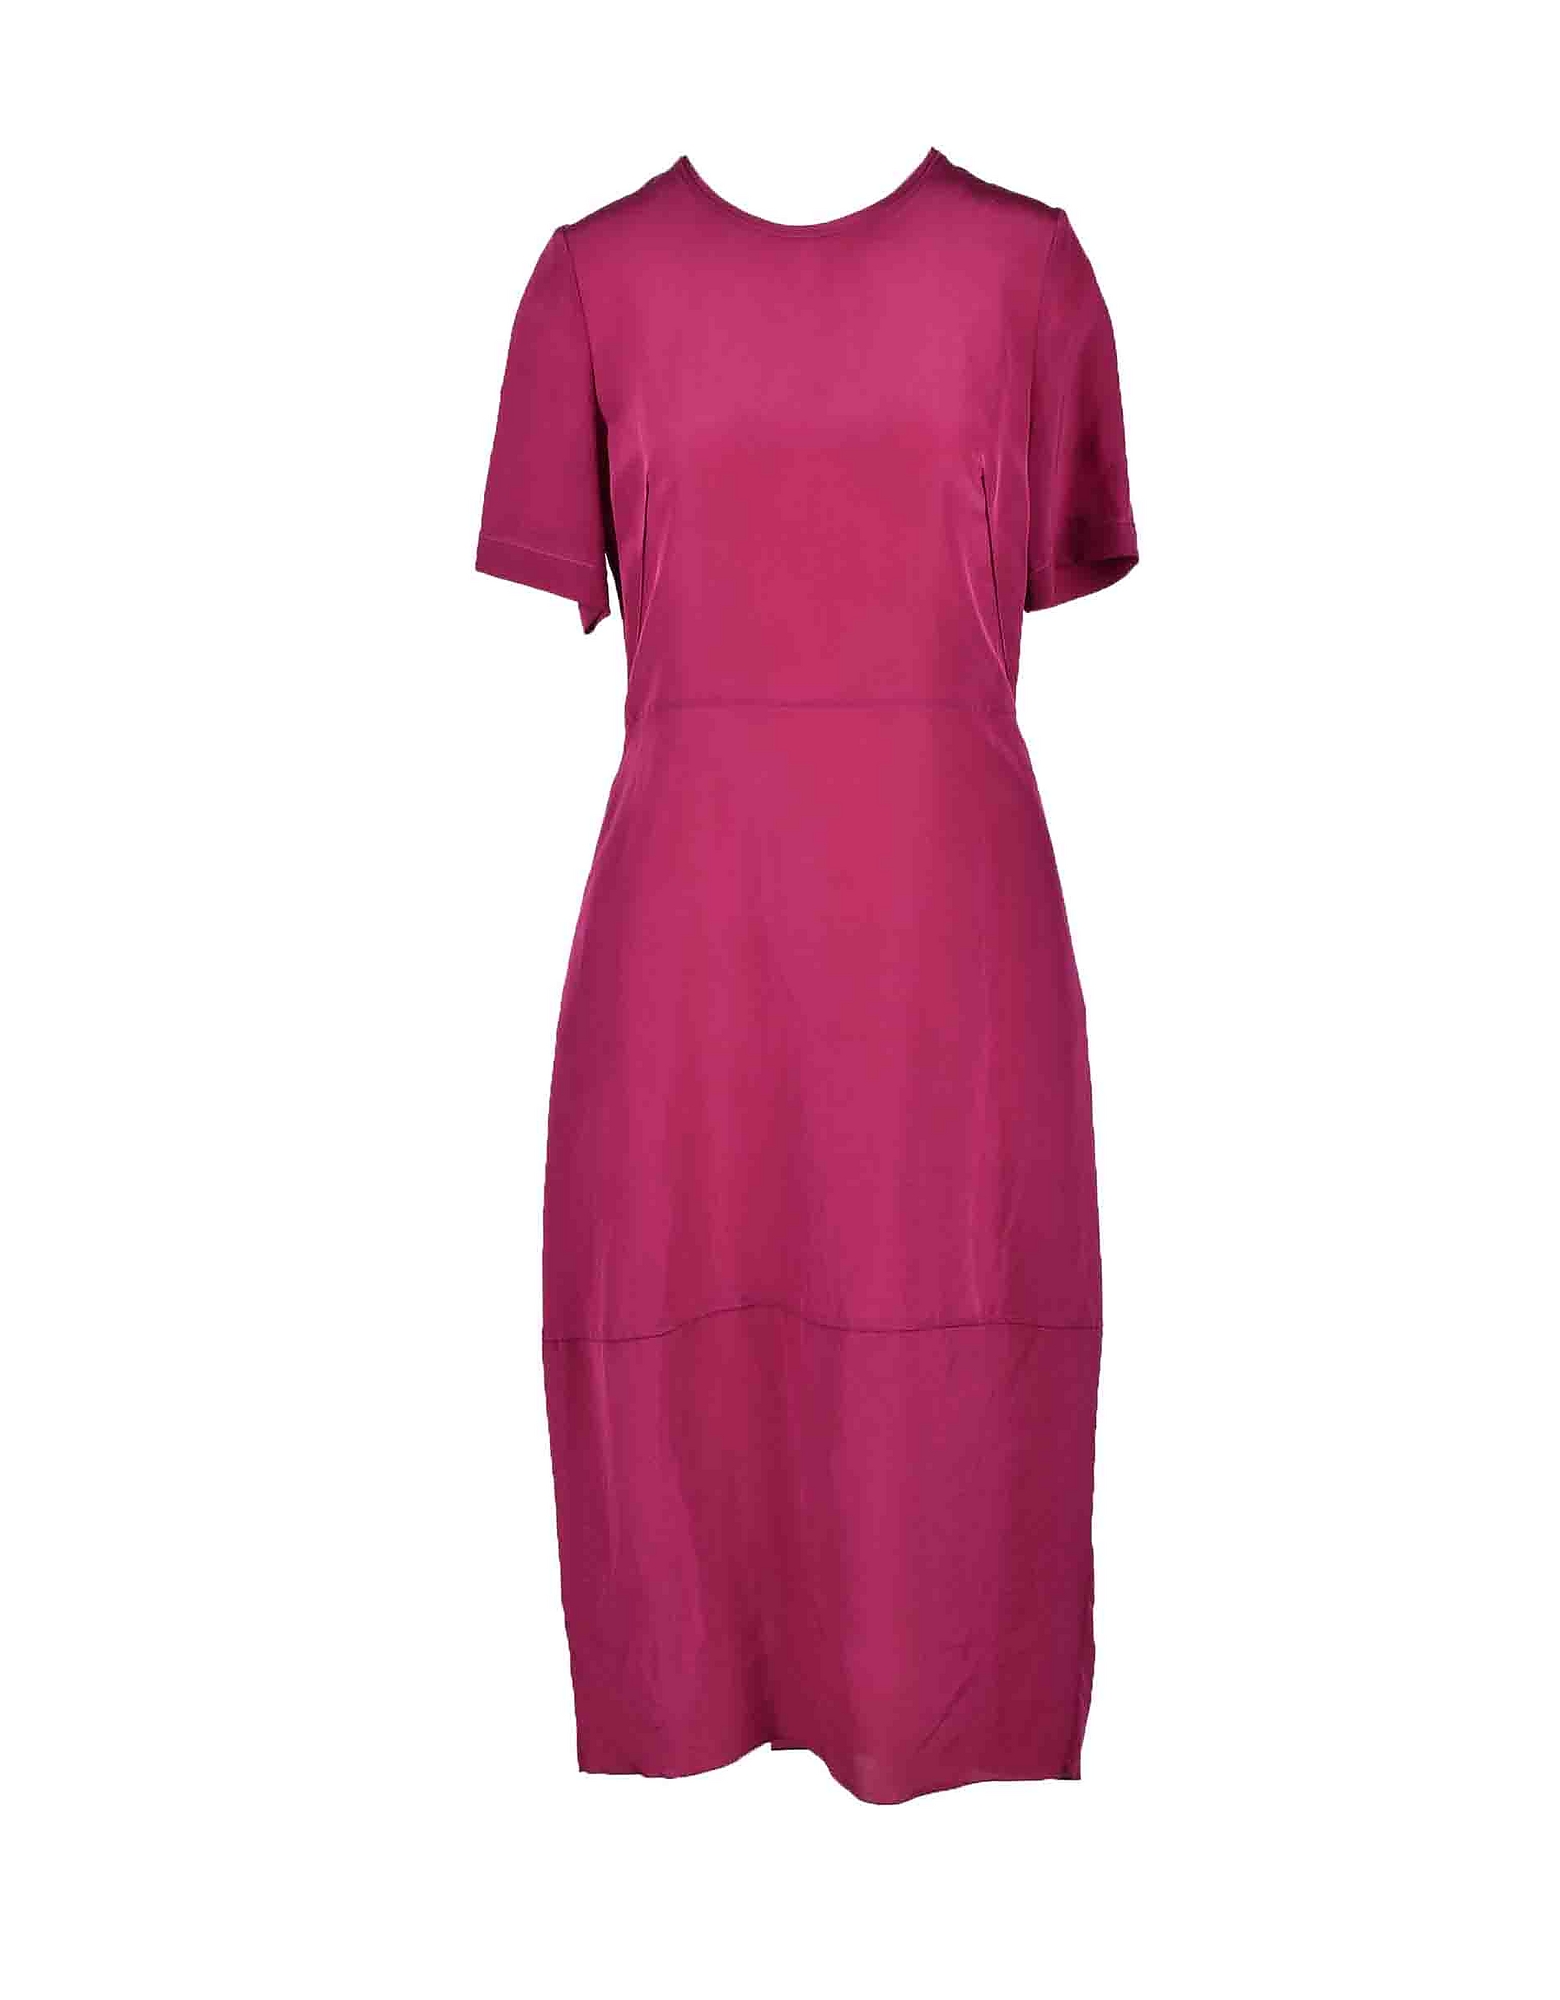 Lorena Antoniazzi  Dresses & Jumpsuits Women's Fuchsia Dress